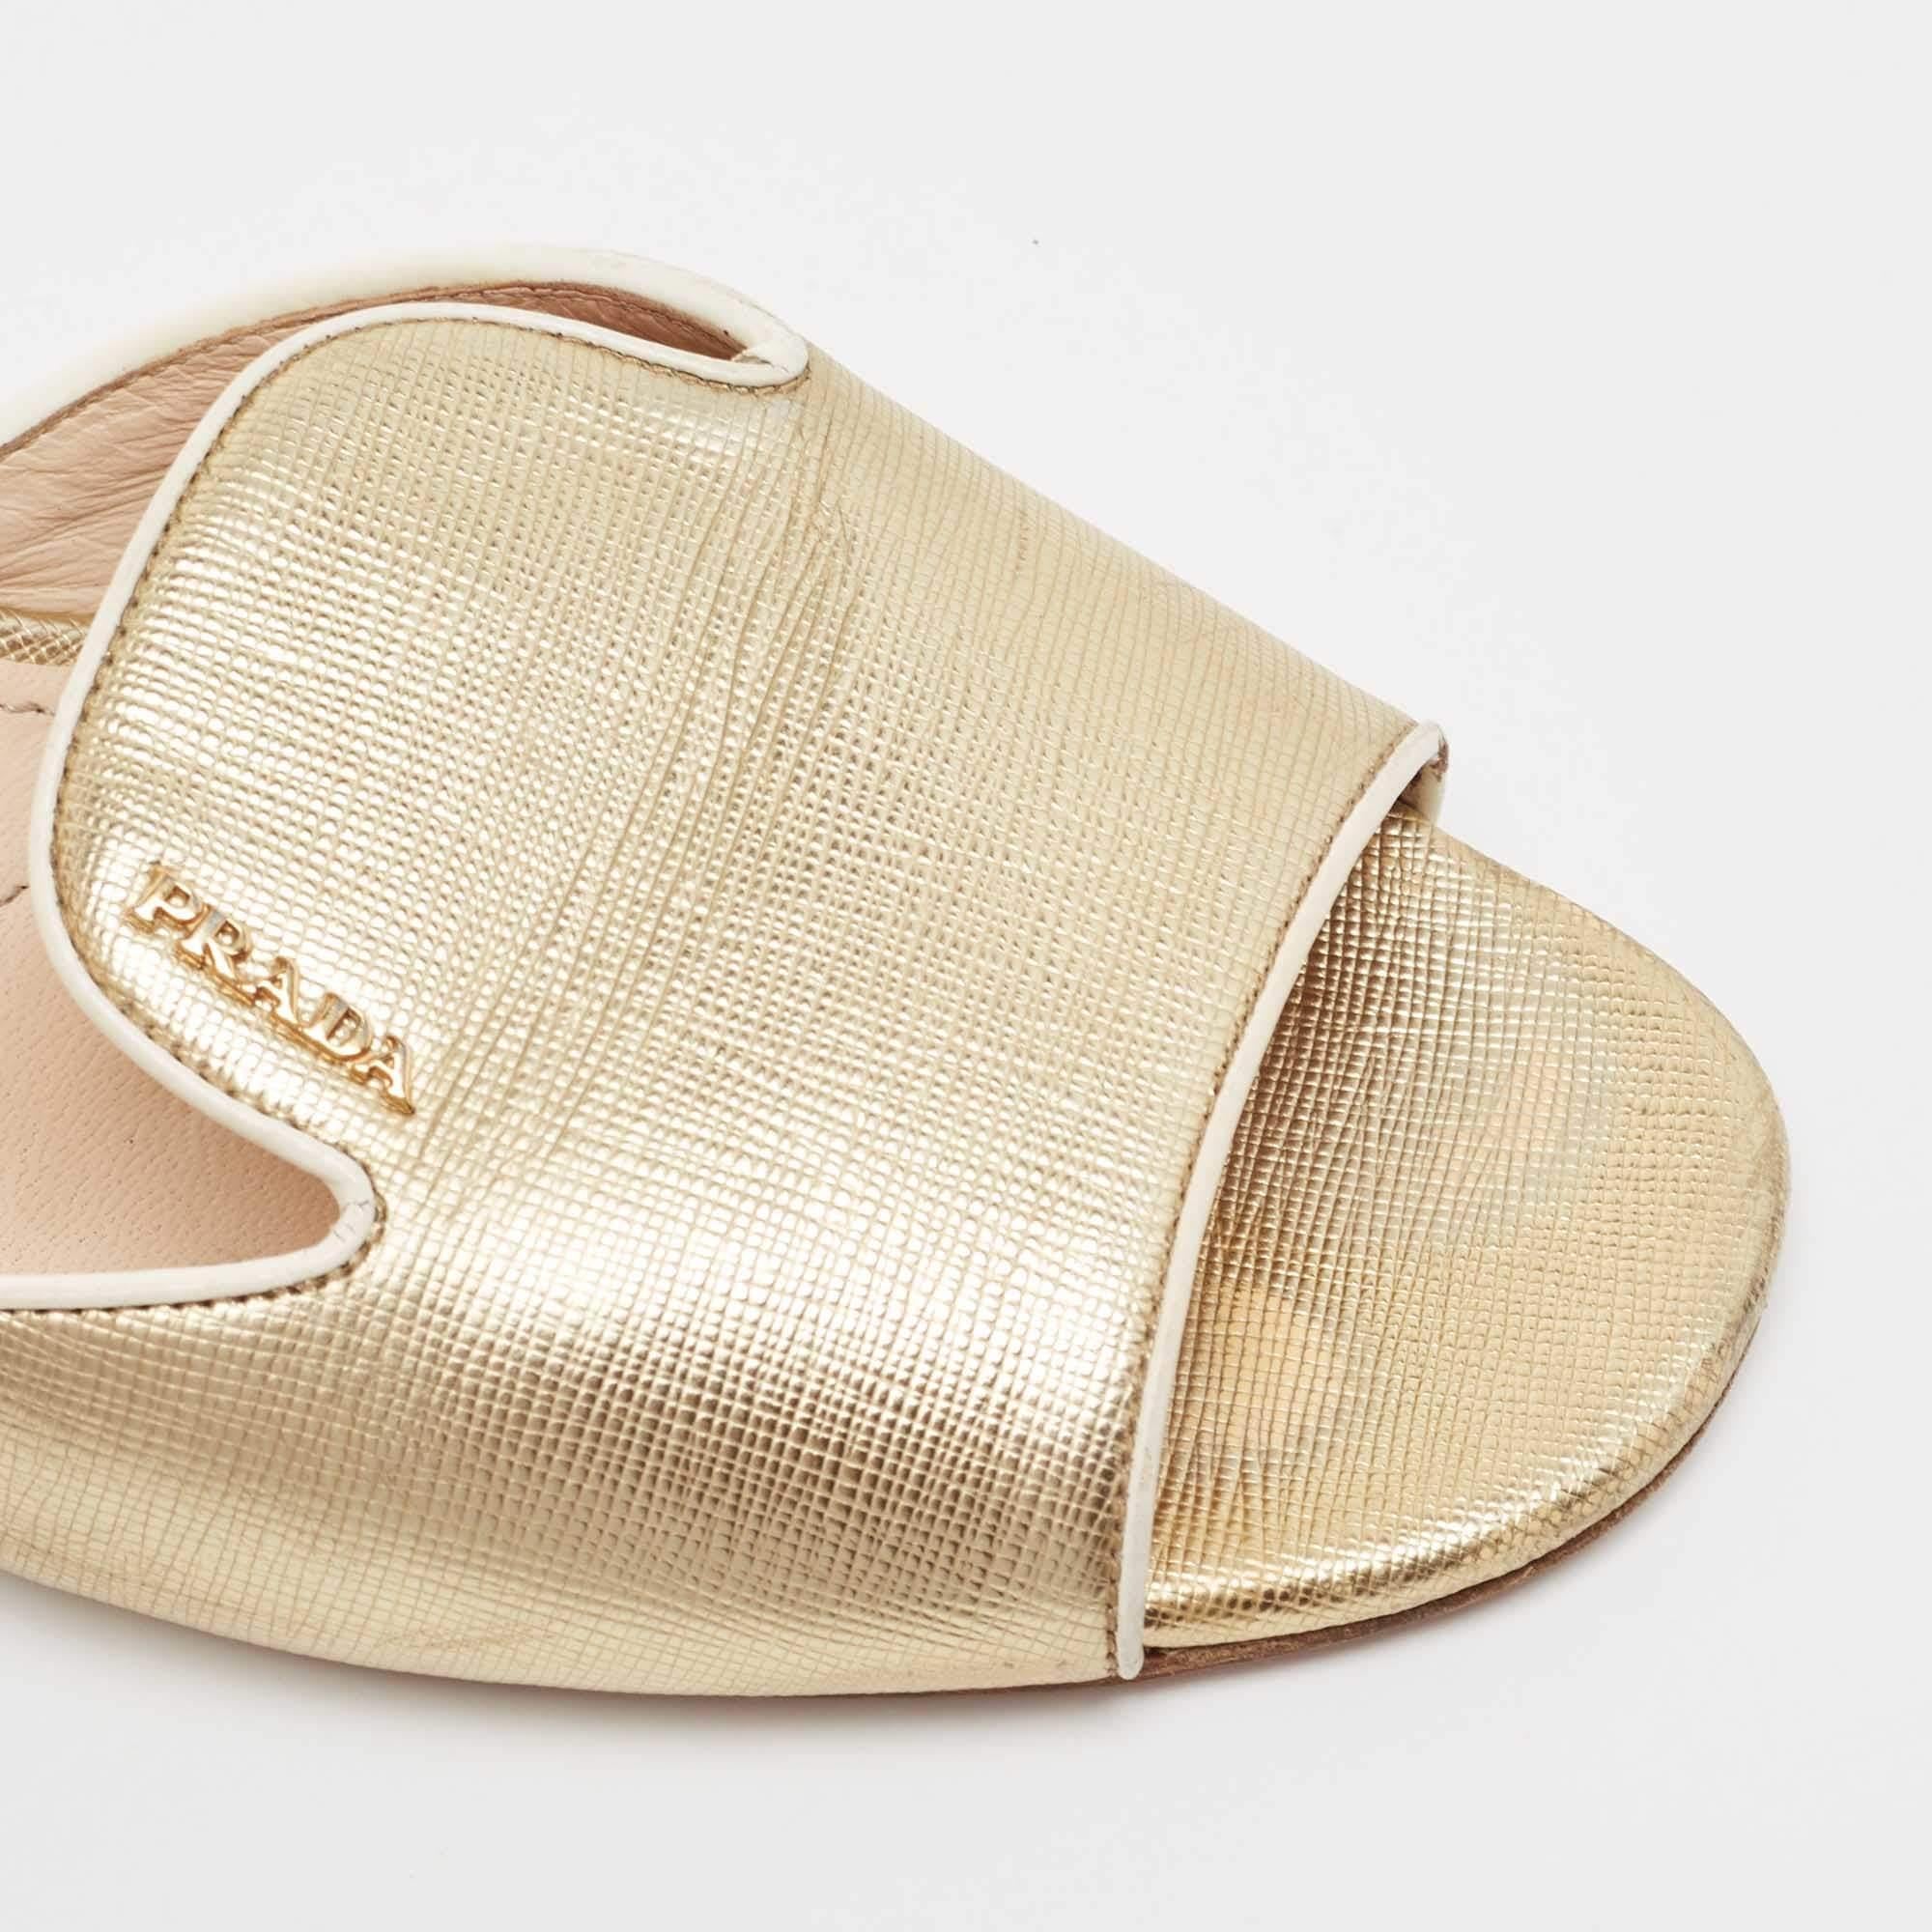 Prada Gold Leather Slide Sandals Size 39.5 3